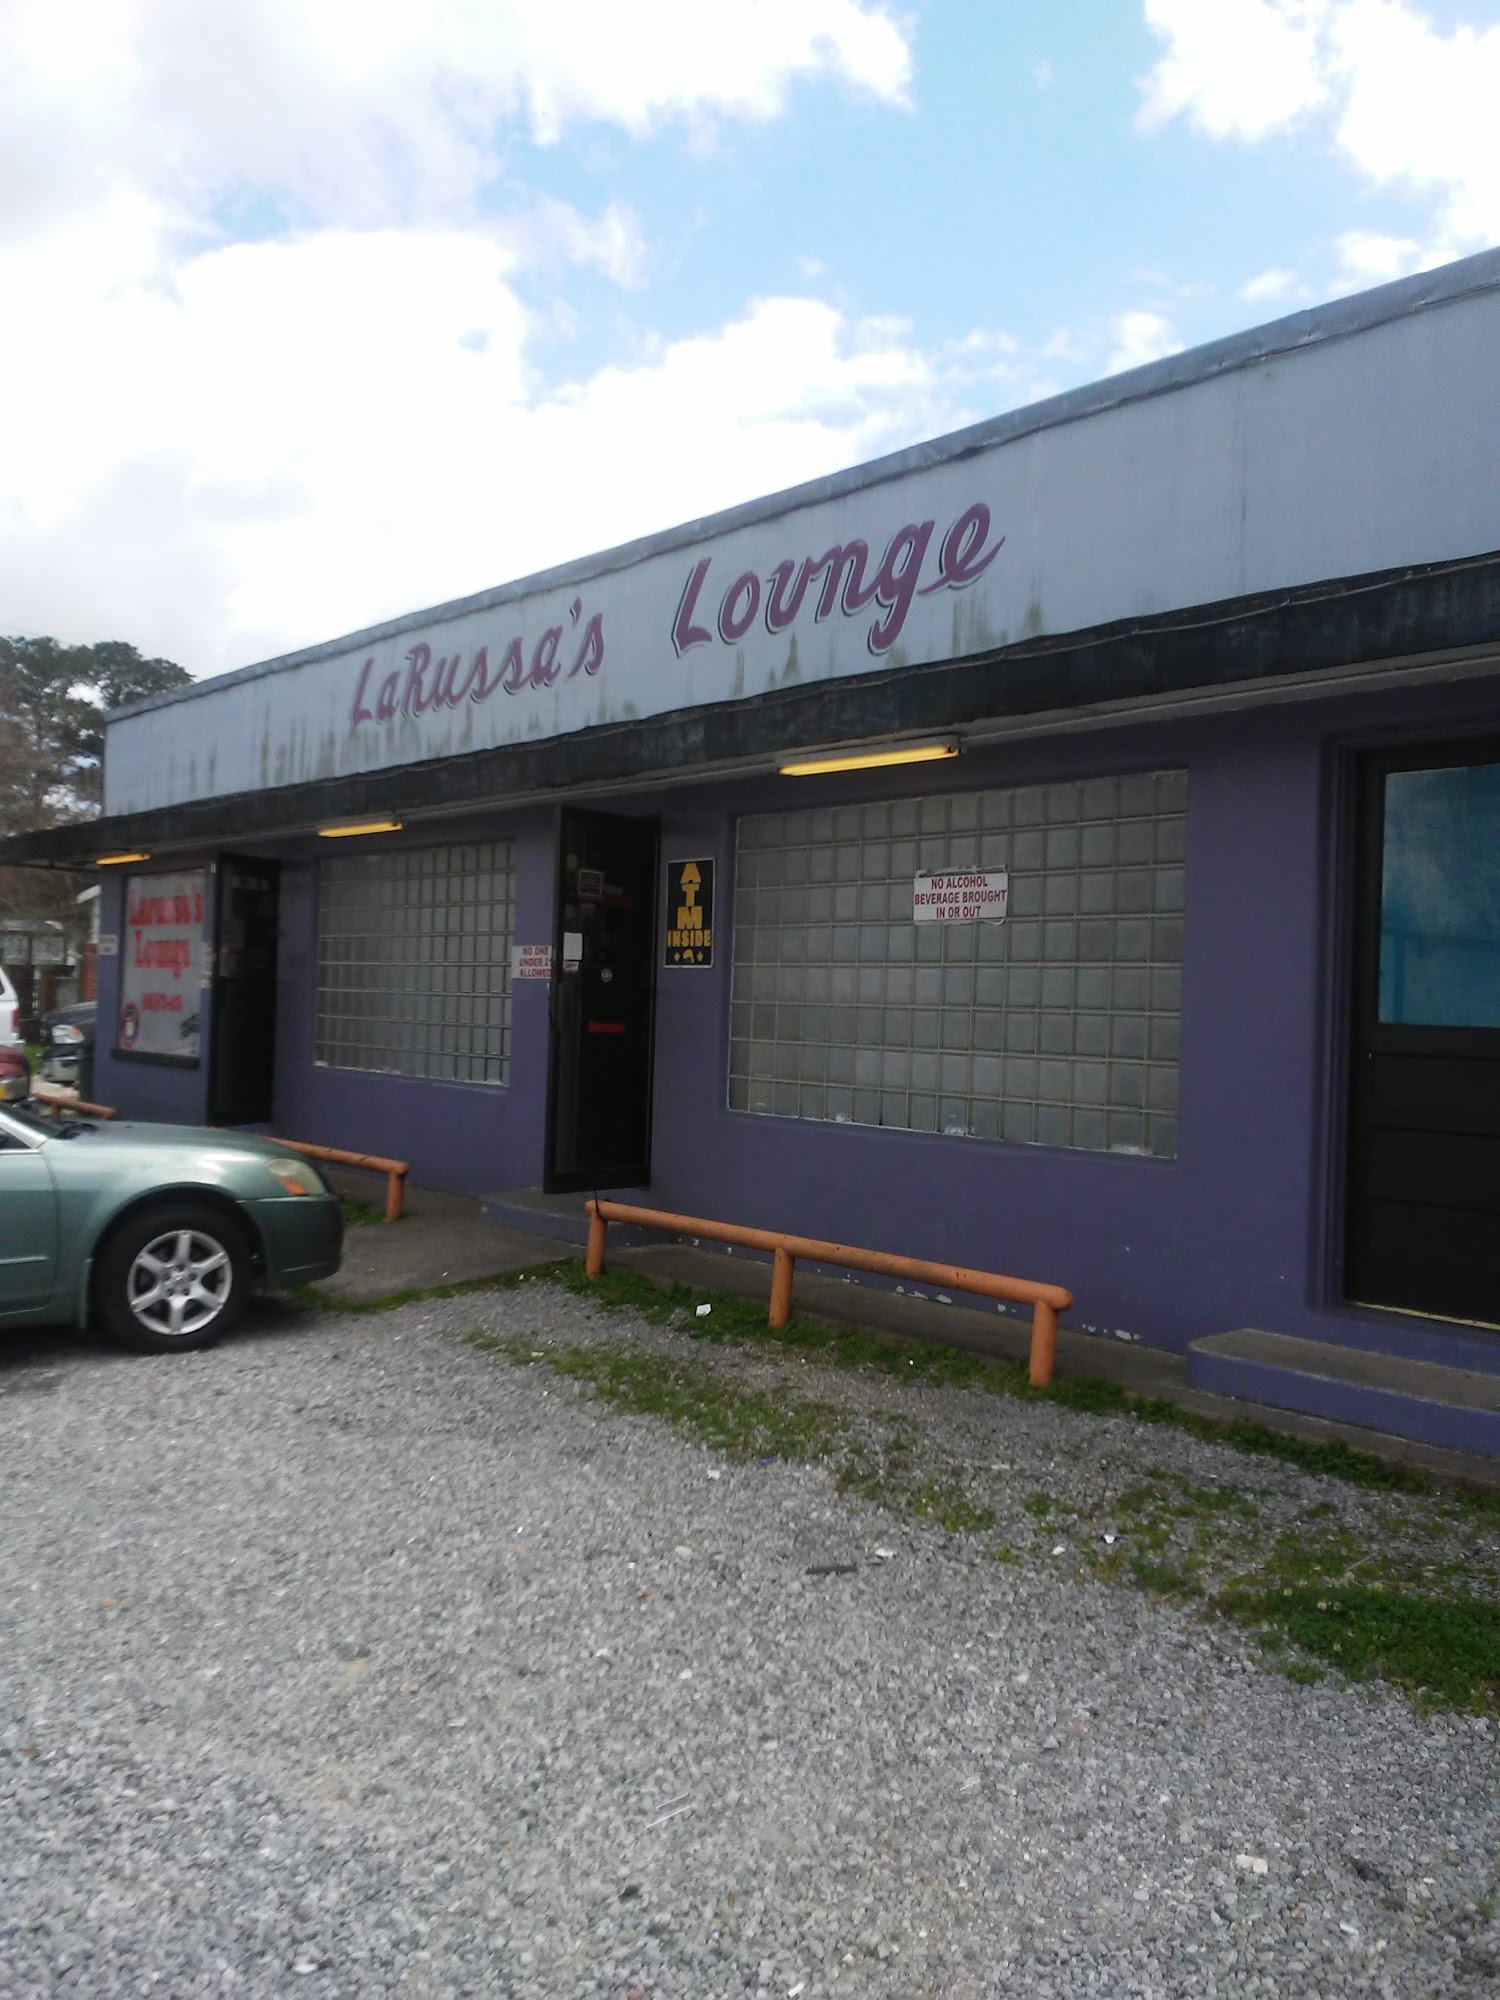 Larussa's Lounge